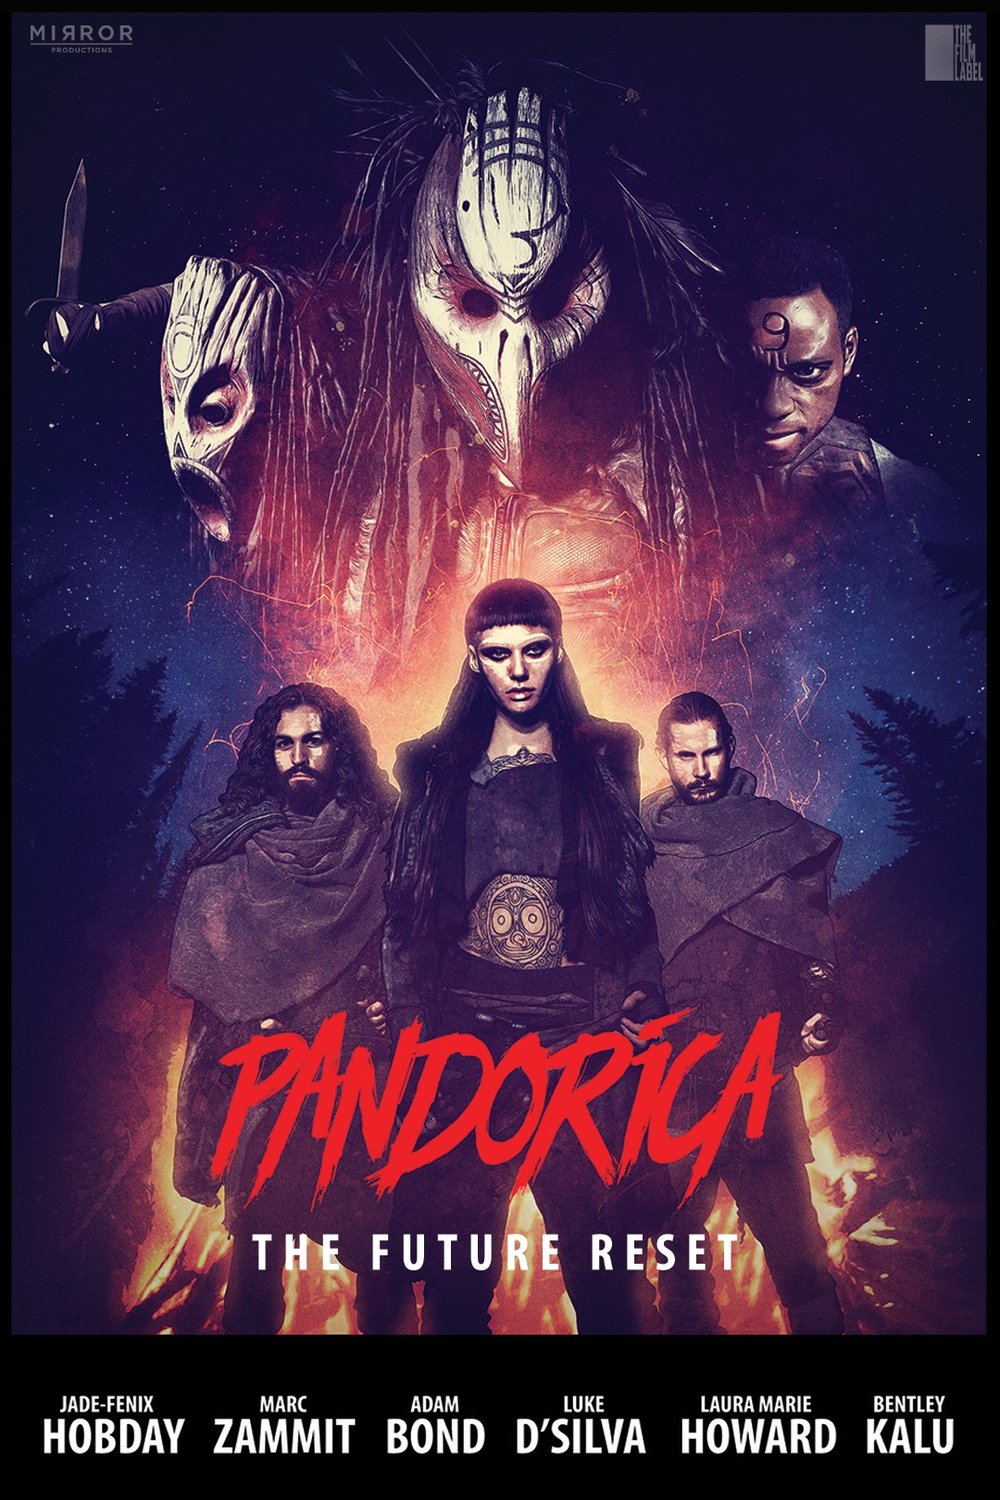 Poster of the movie Pandorica